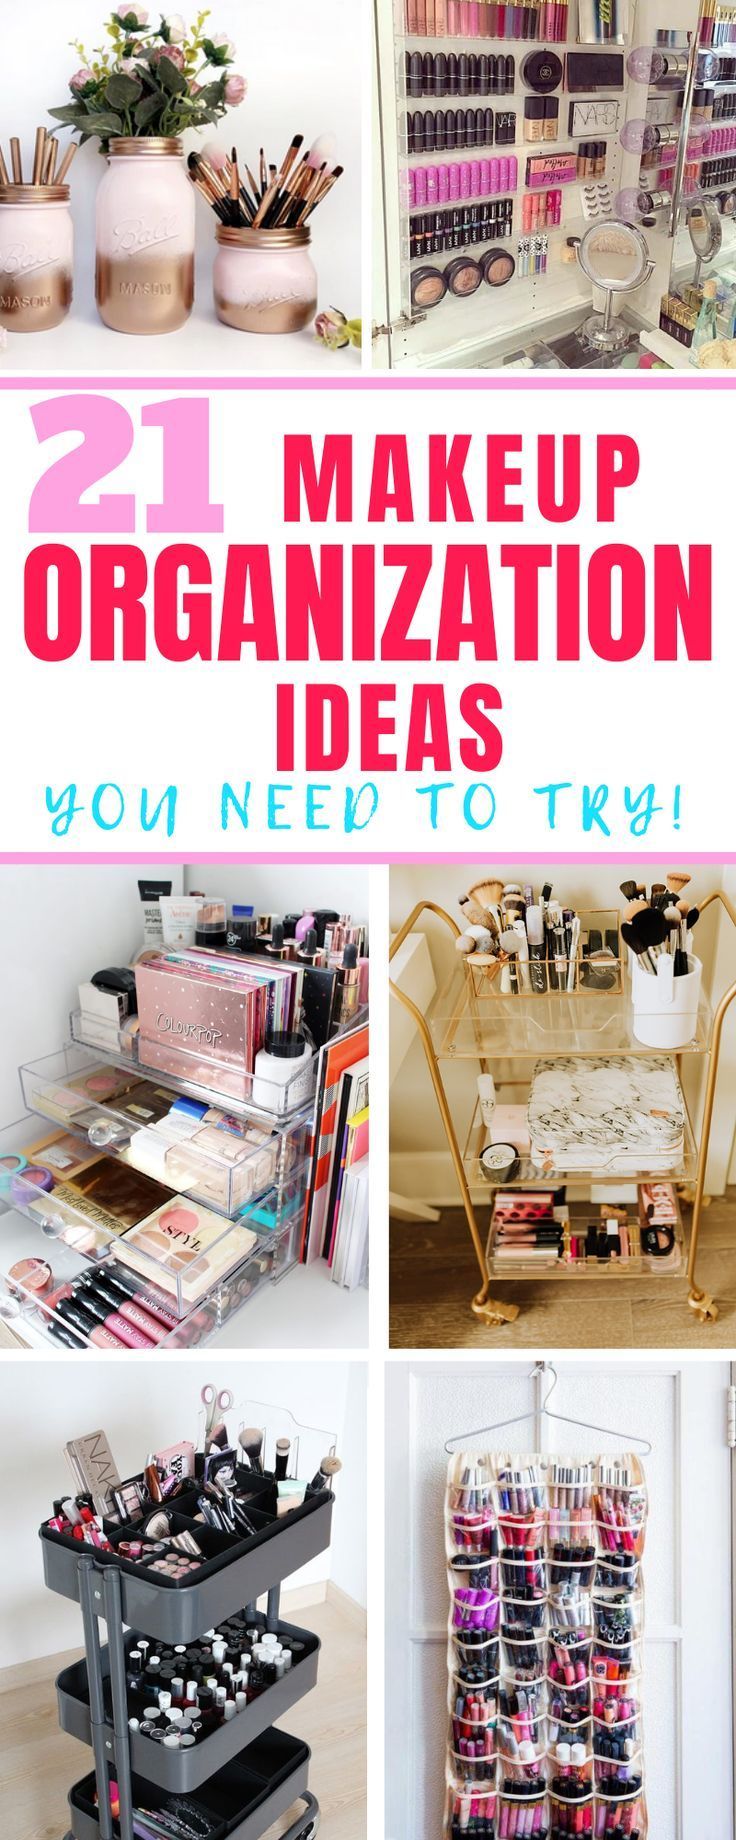 21 Creative Makeup Organization Ideas to Declutter Your Space - 21 Creative Makeup Organization Ideas to Declutter Your Space -   15 diy Organization shelf ideas